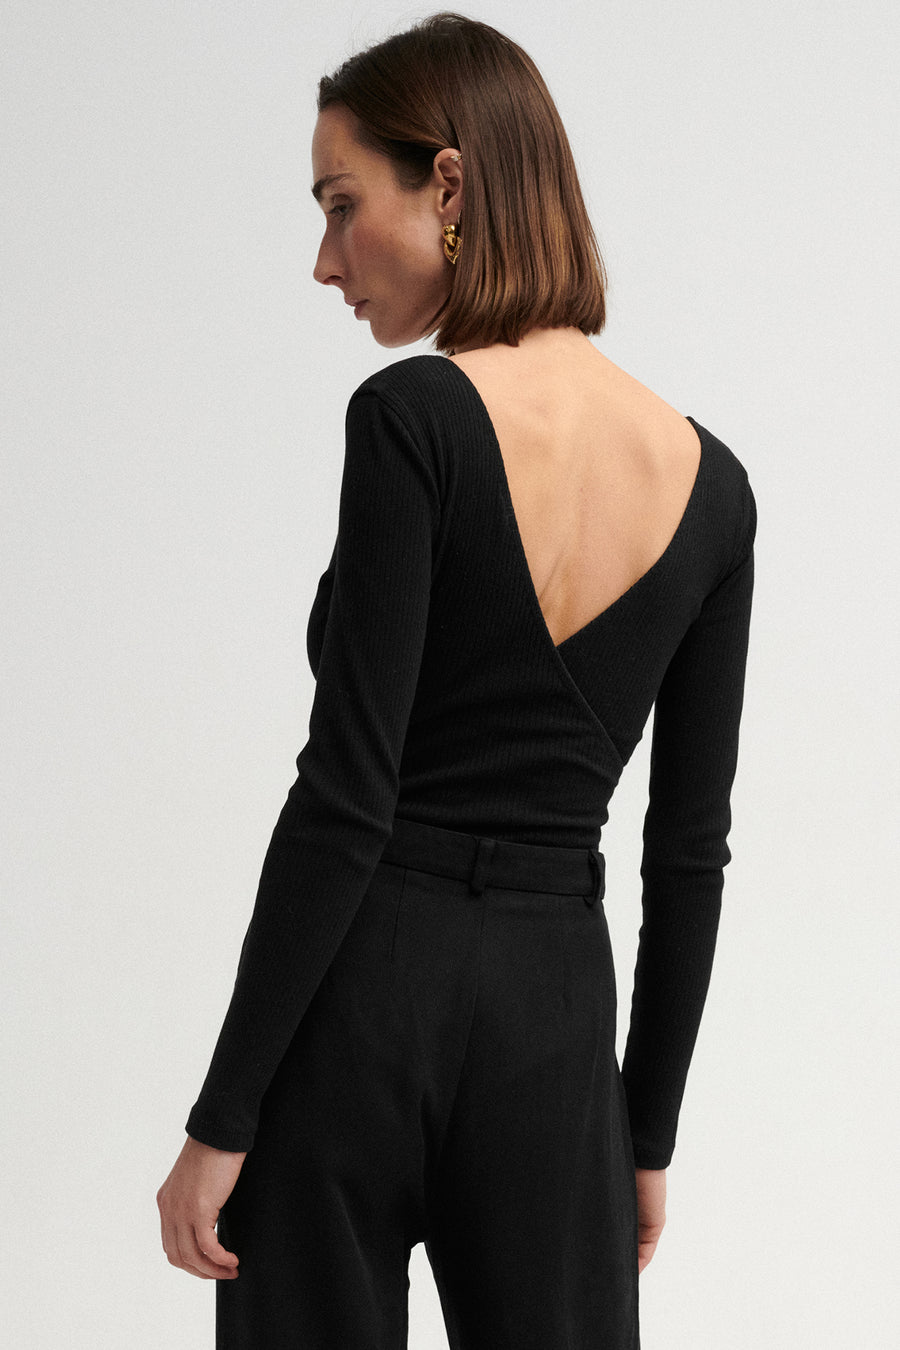 Bodysuit in organic cotton / 01 / 06 / onyx black